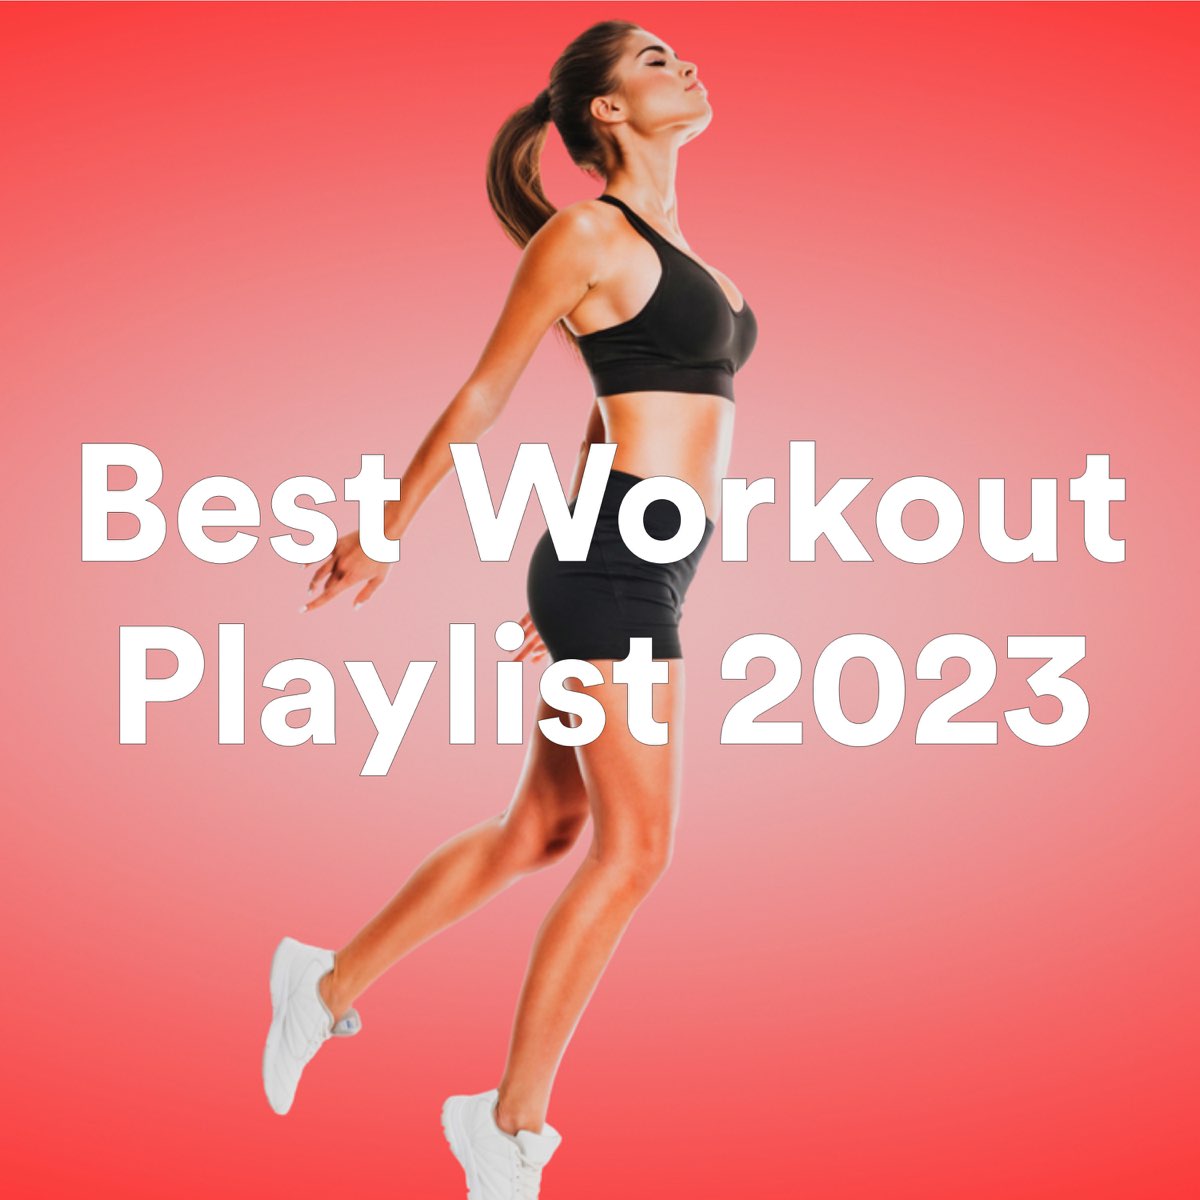 Best Workout Playlist 2023 - Album by Various Artists - Apple Music